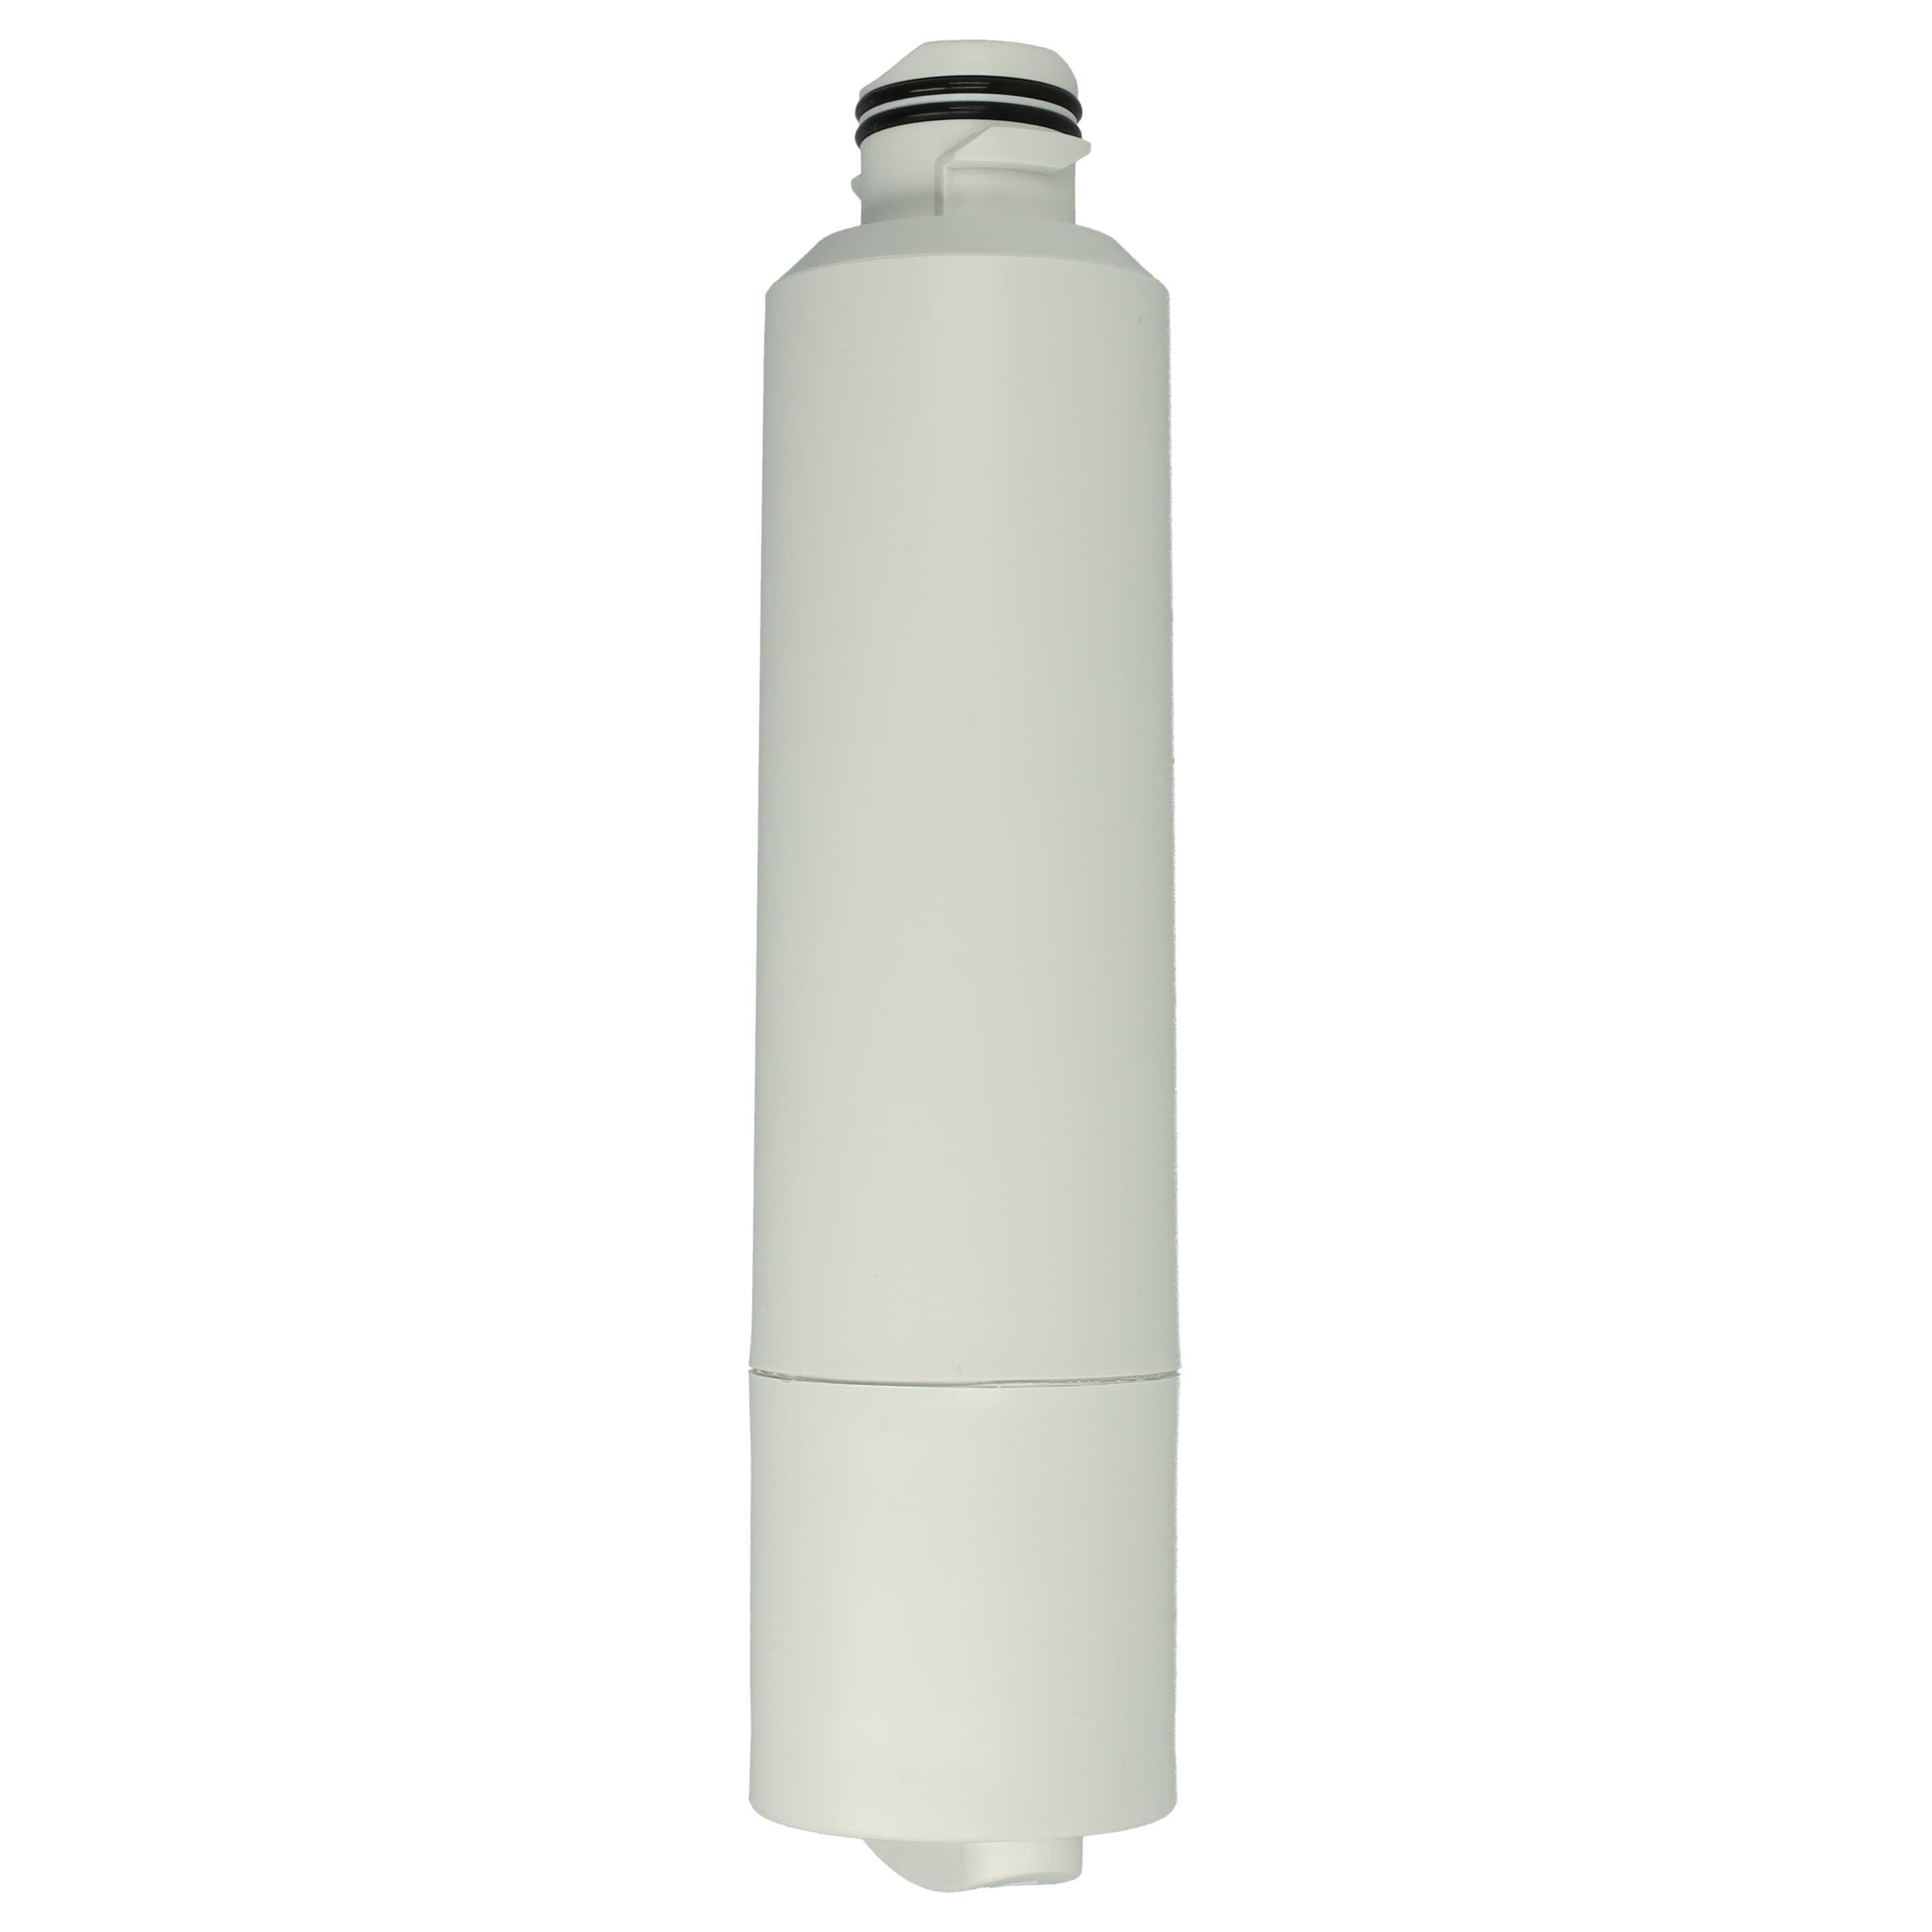 2x Fridge Water Filter replaces Samsung DA29-00020A, DA29-00020BF, DA29-00020BM for Side-by-Side Refrigerator